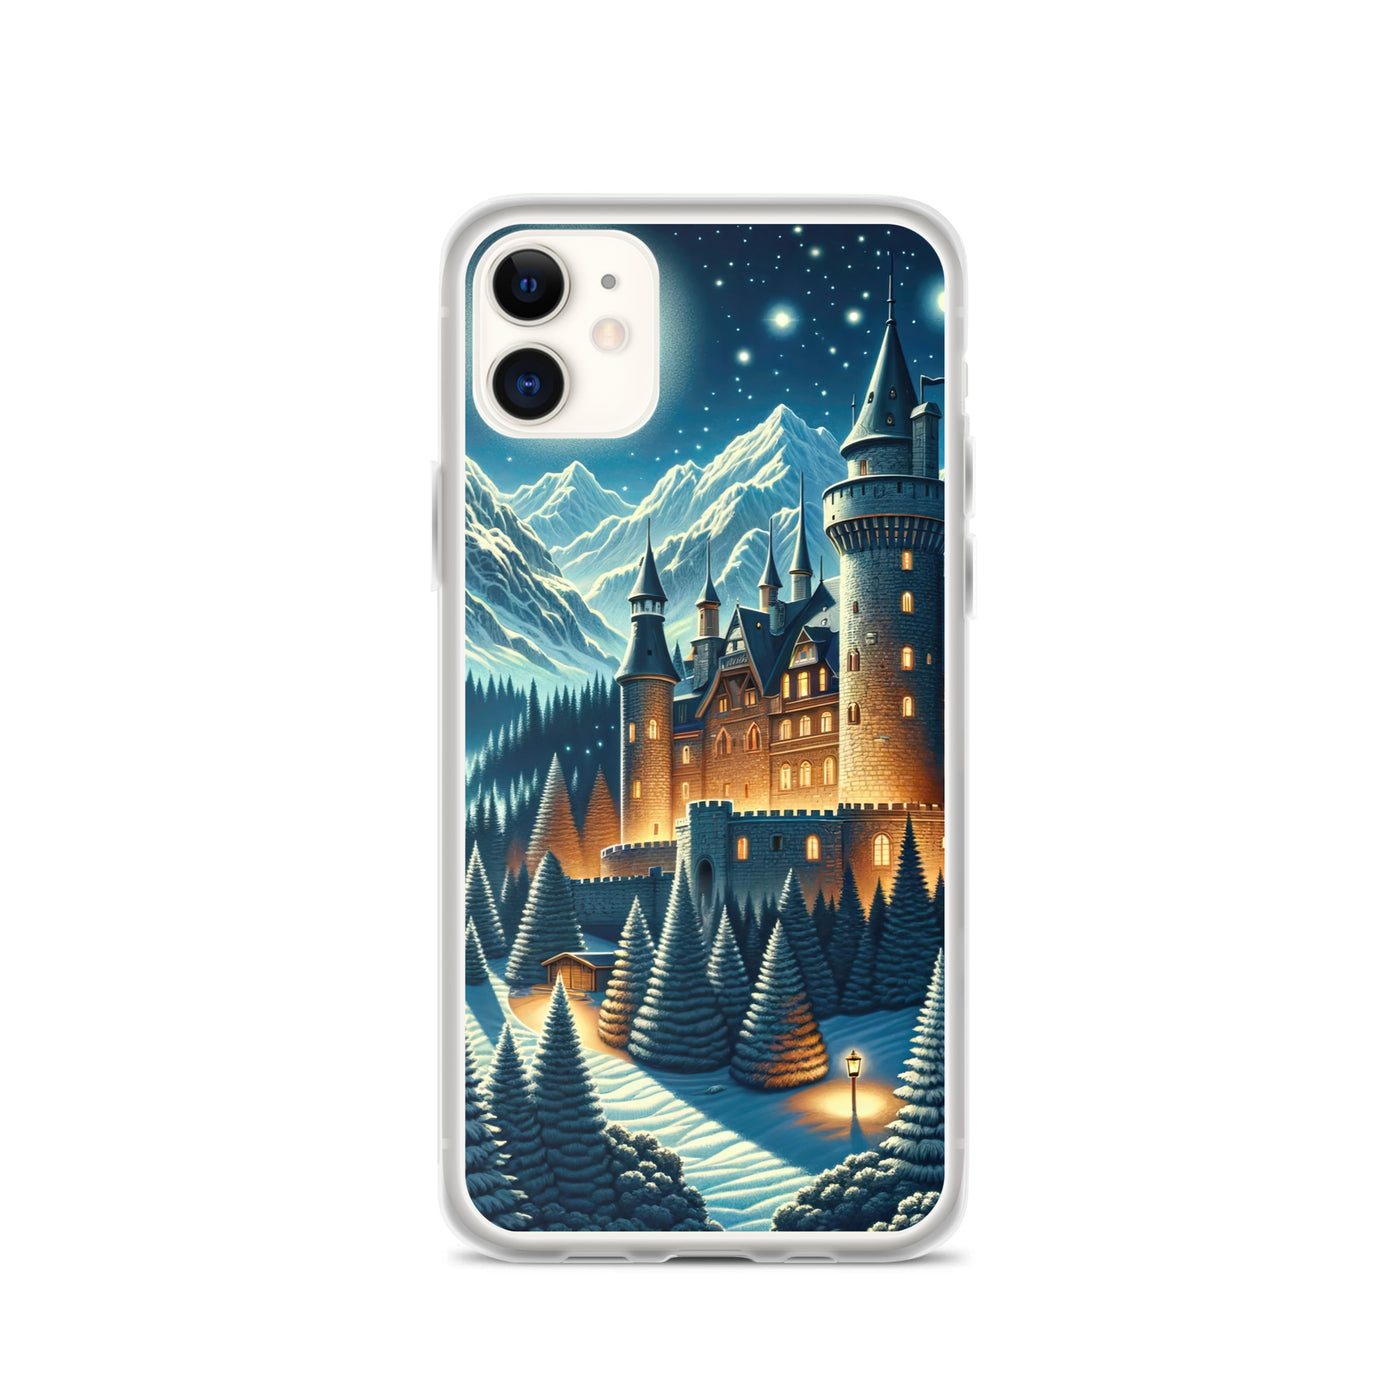 Mondhelle Schlossnacht in den Alpen, sternenklarer Himmel - iPhone Schutzhülle (durchsichtig) berge xxx yyy zzz iPhone 11